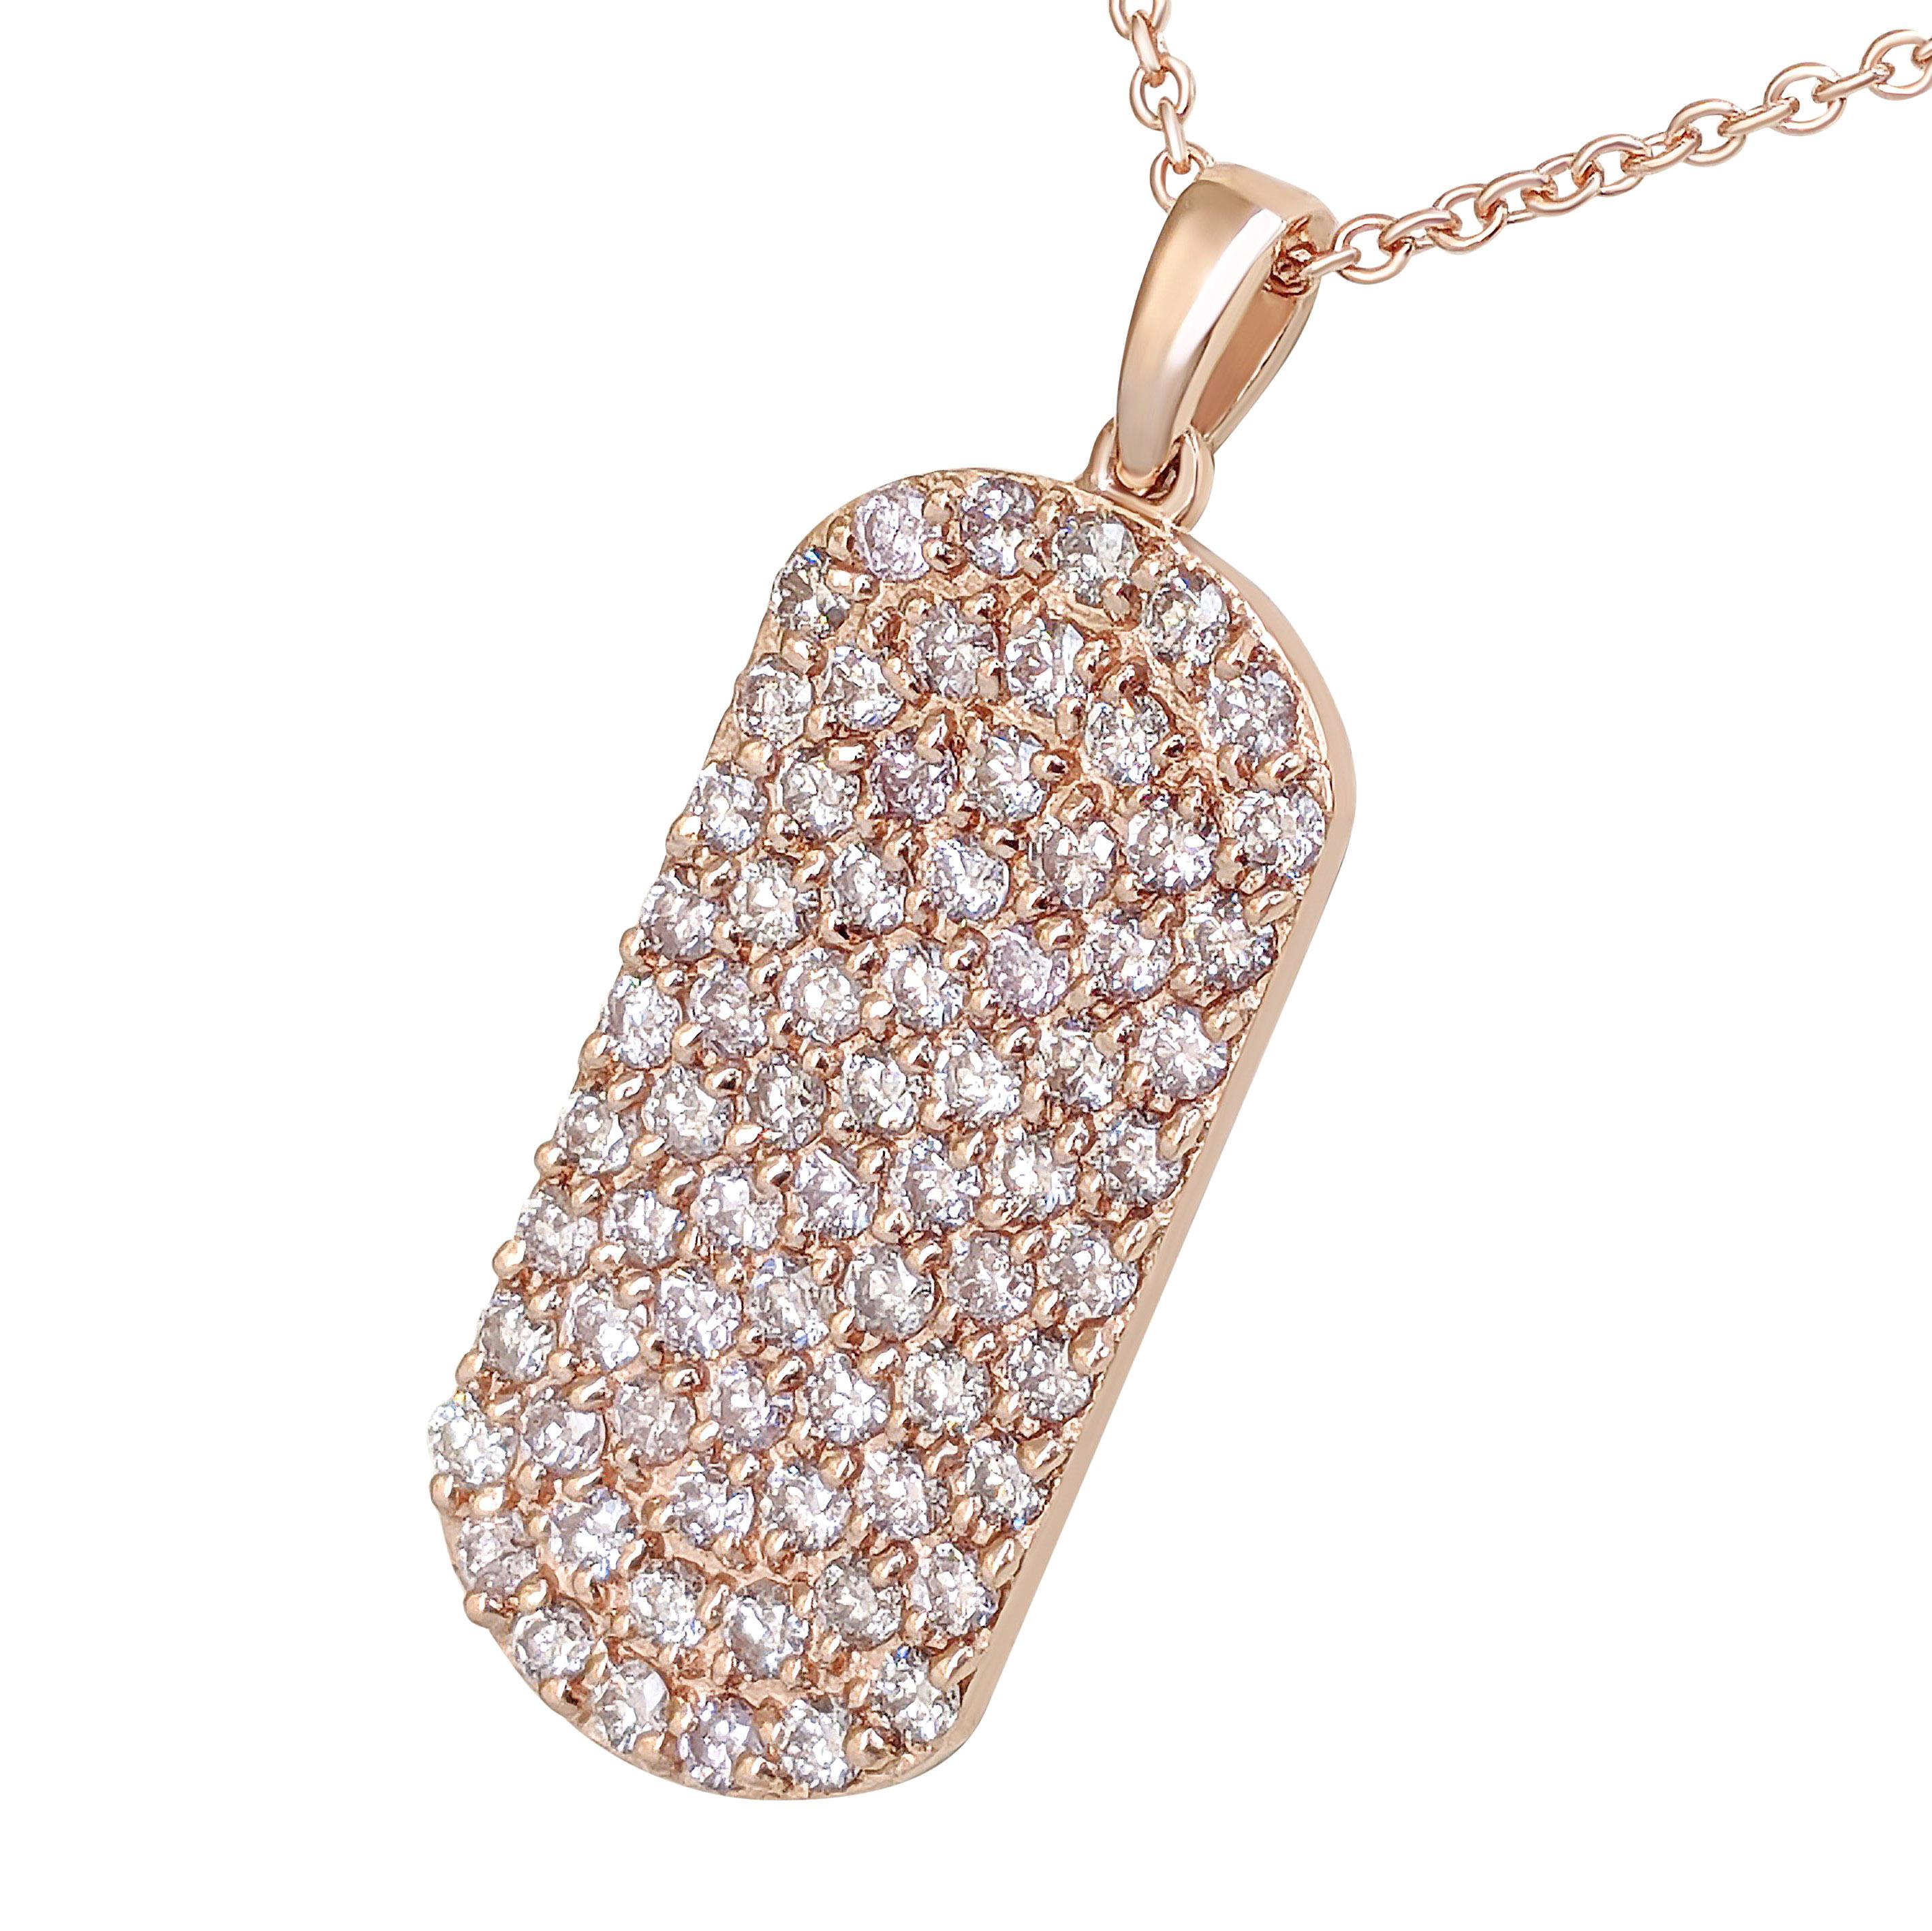 Round Cut NO RESERVE! 1.10Ct Fancy Pink Diamond 14 kt. Gold Pendant Necklace For Sale